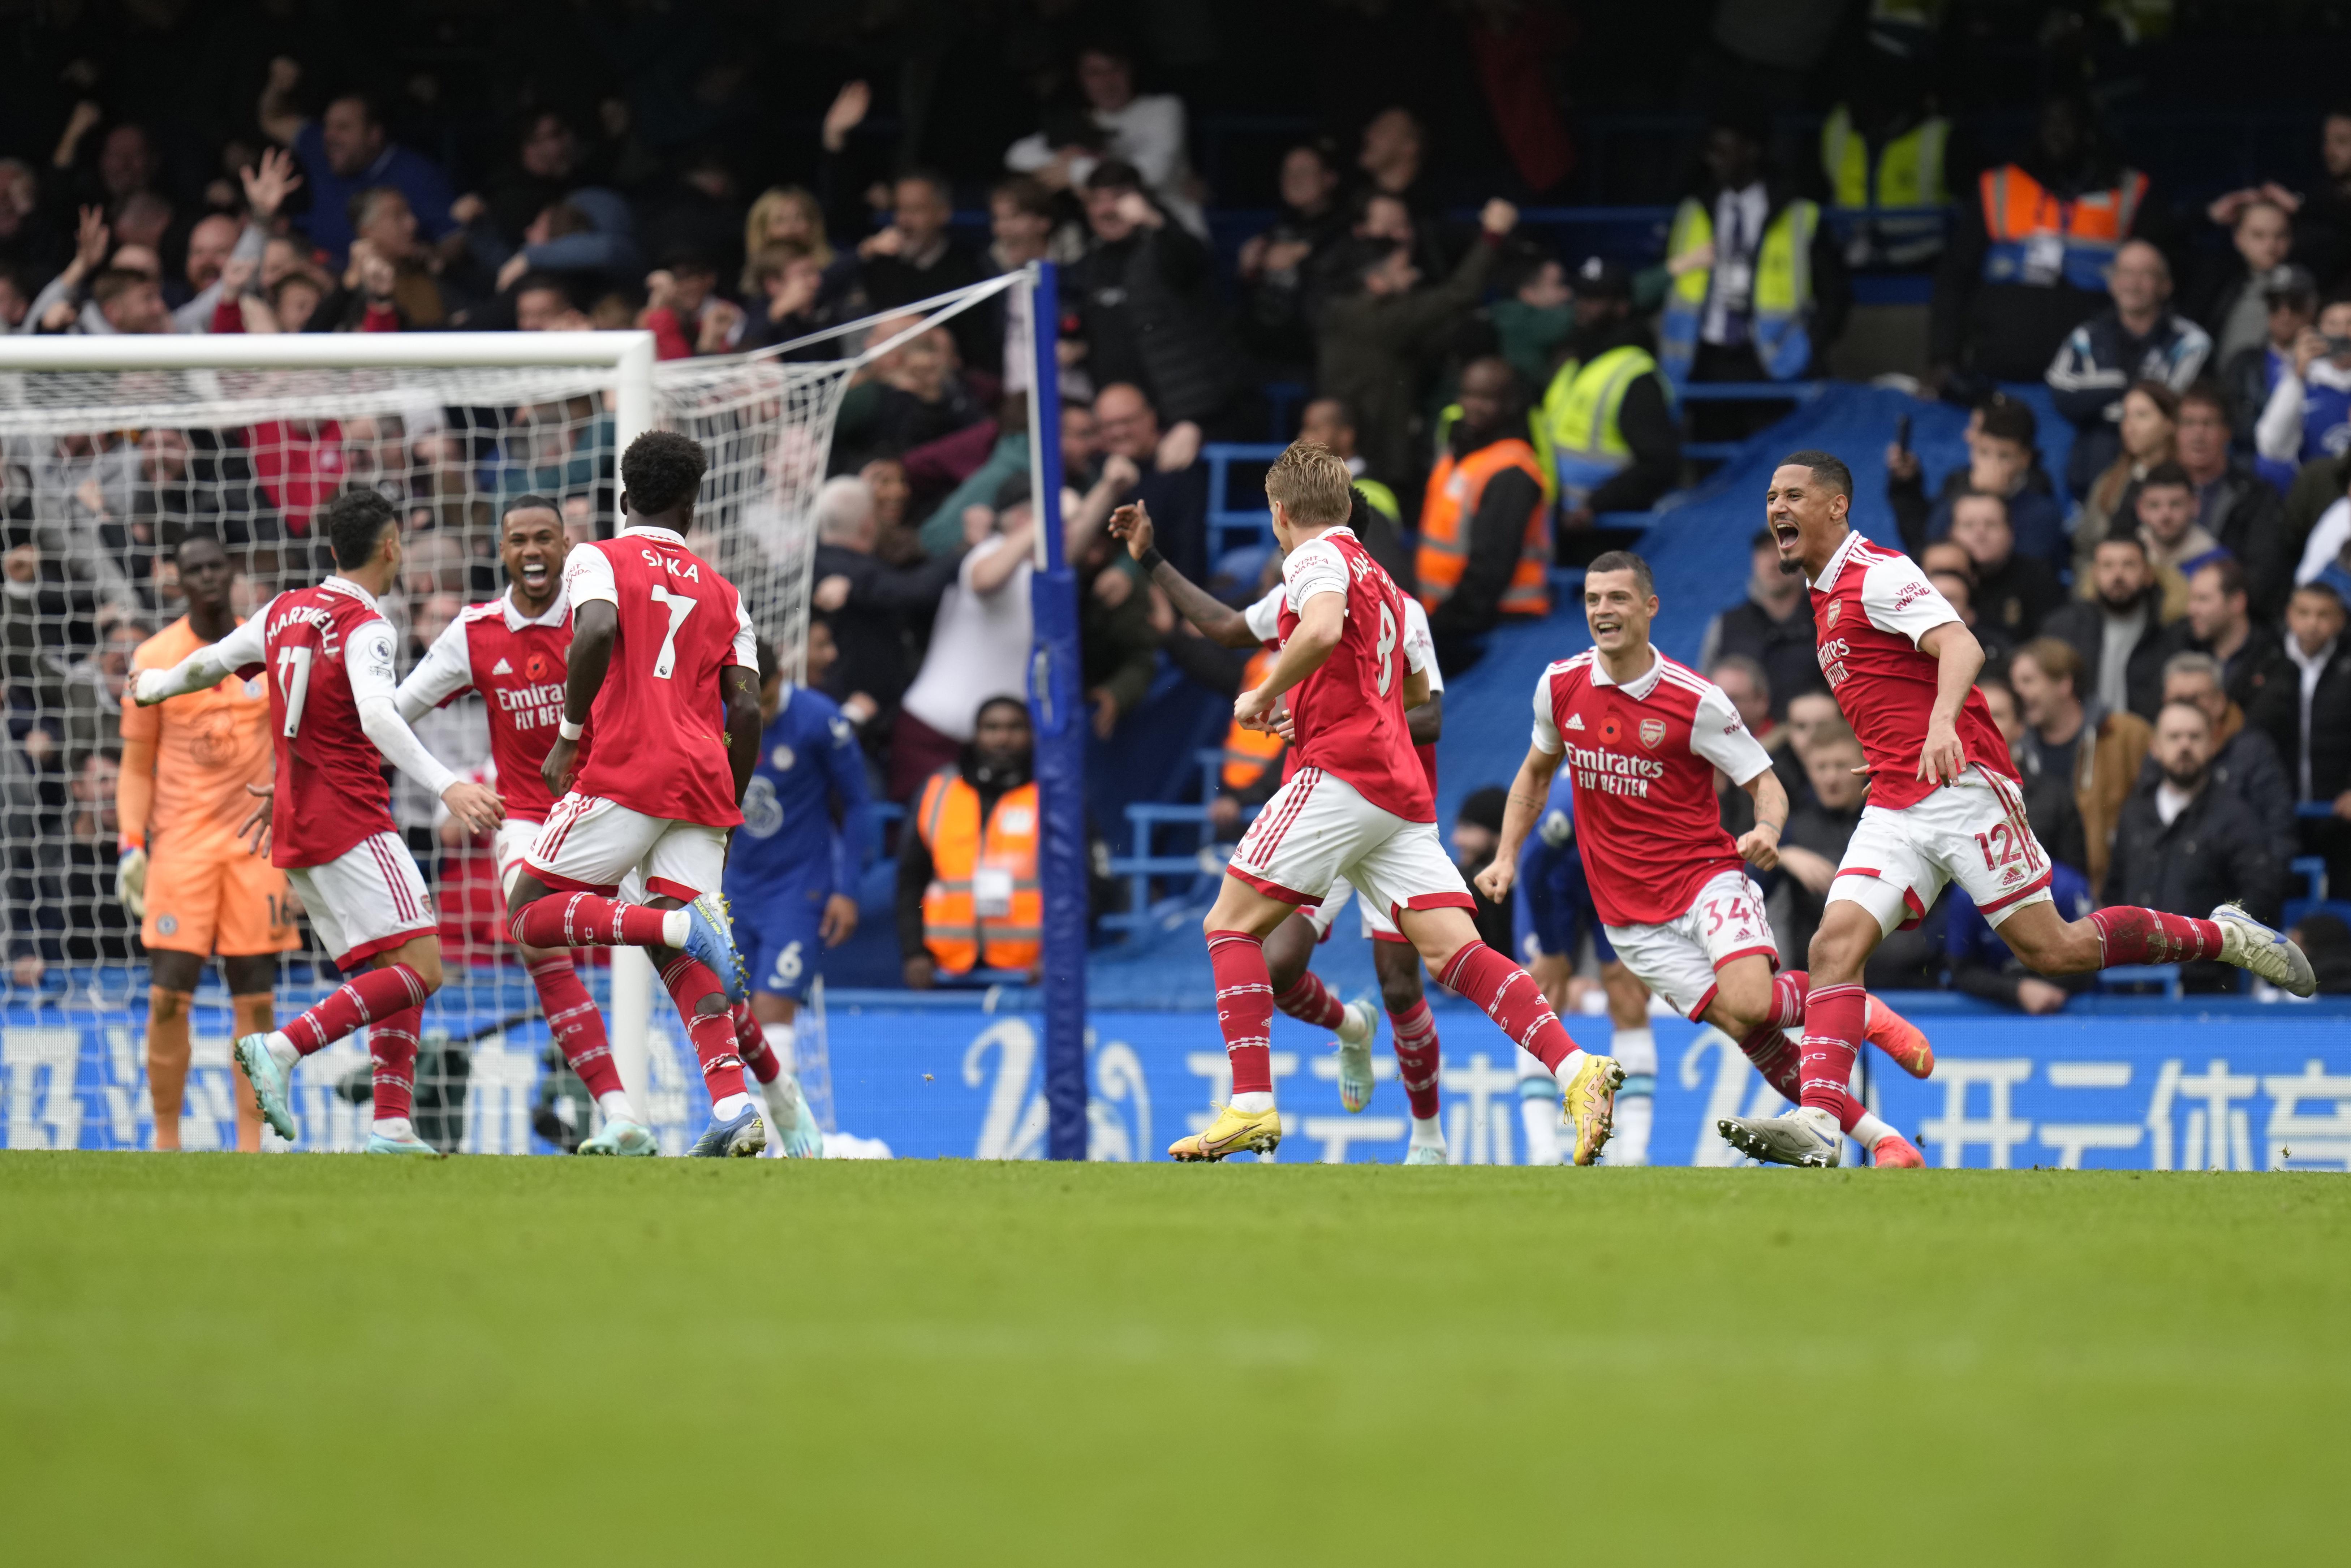 ÖZET | Chelsea - Arsenal maç sonucu: 0-1